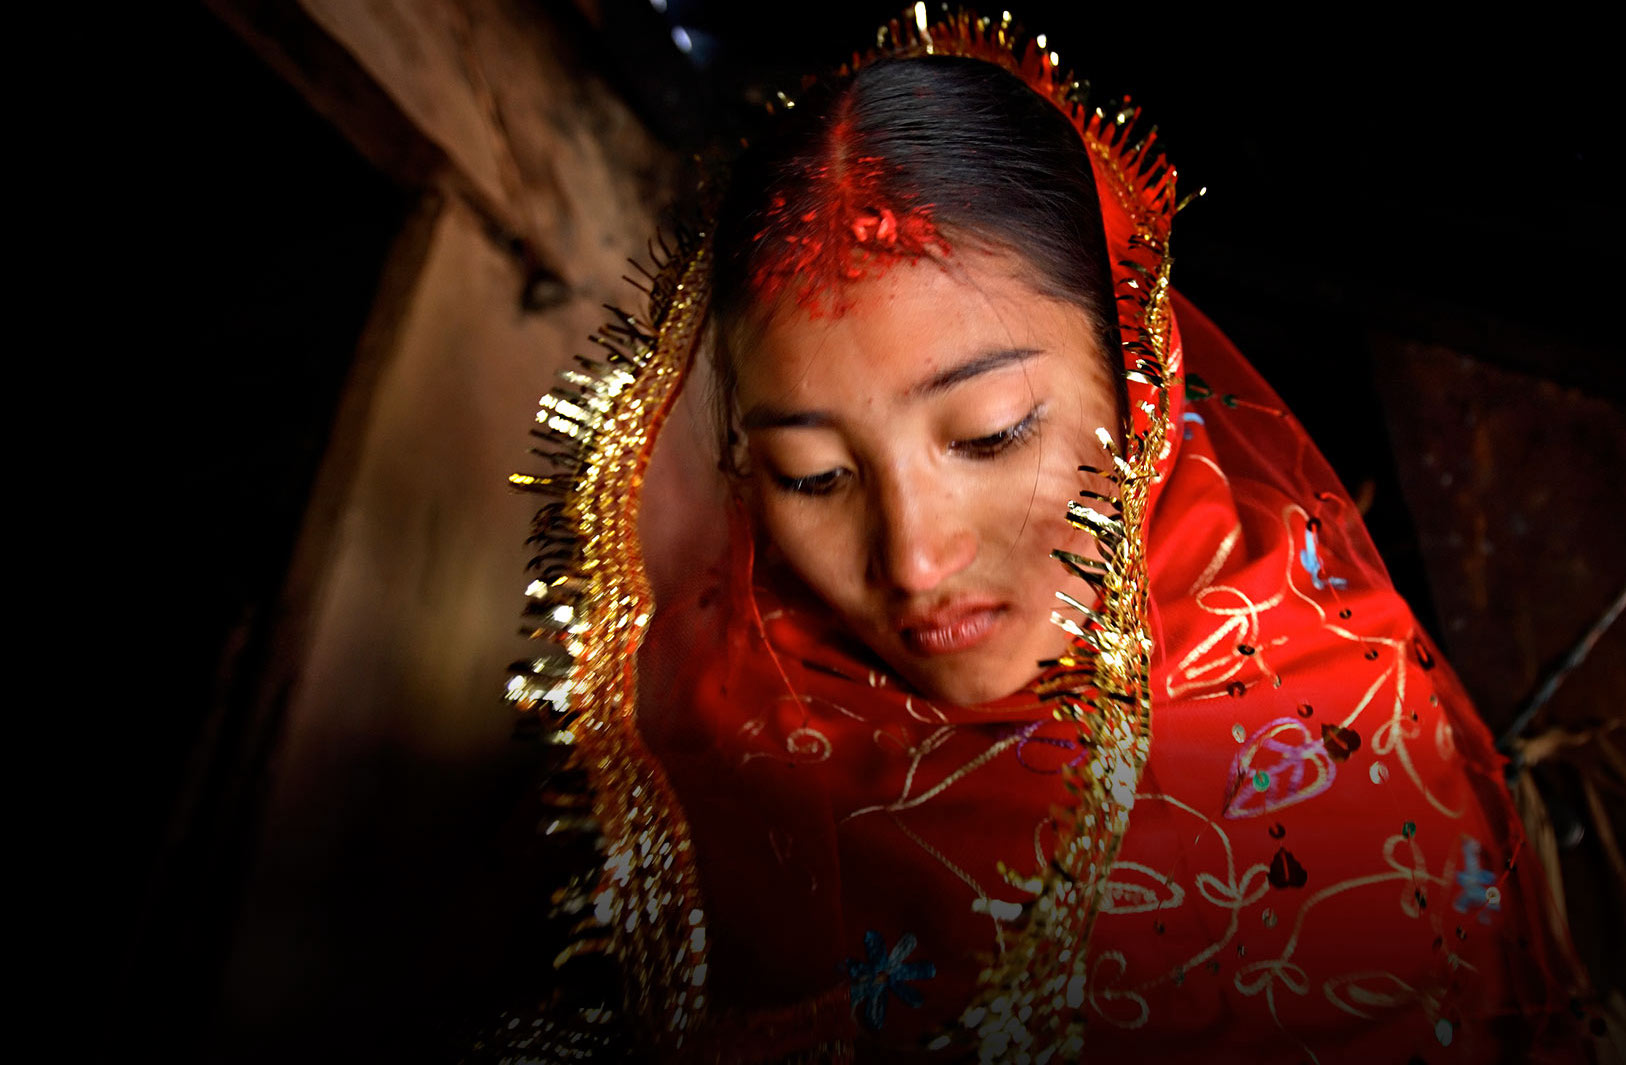 Piyasa Hewan Filem Xxx - Child Marriage | Council on Foreign Relations